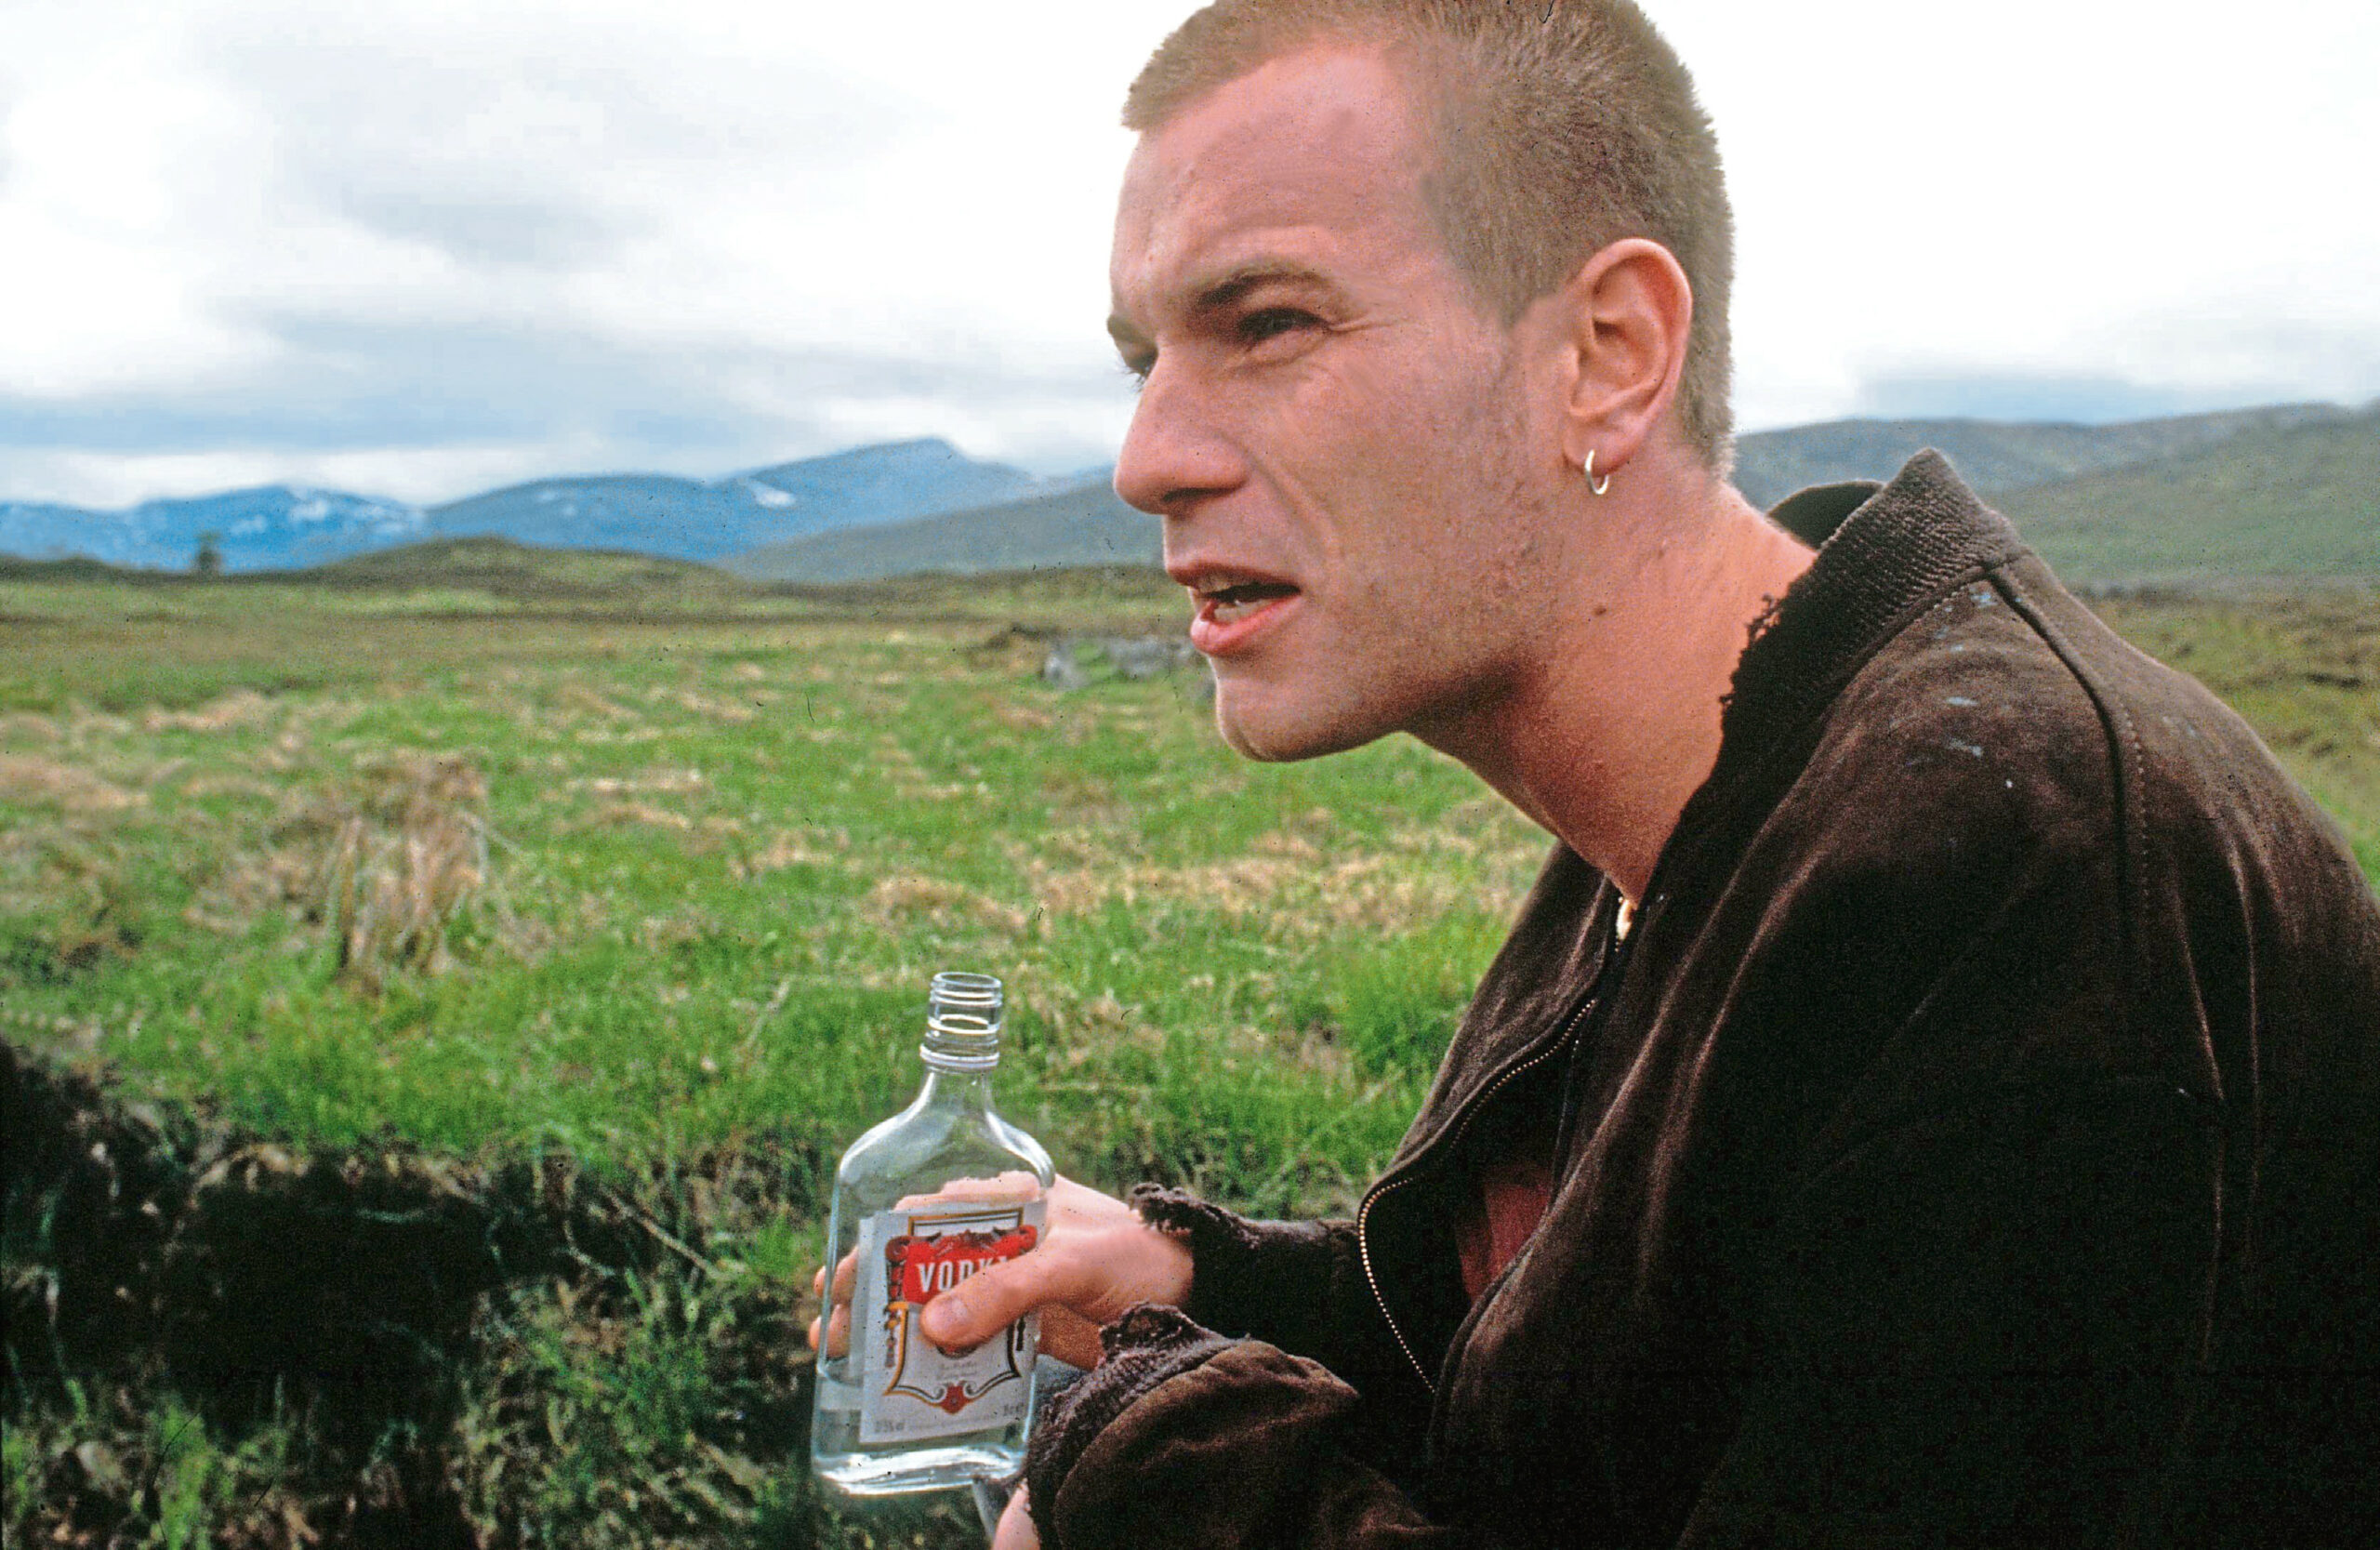 Ewan McGregor as Mark Renton holding a bottle of vodka in Trainspotting.